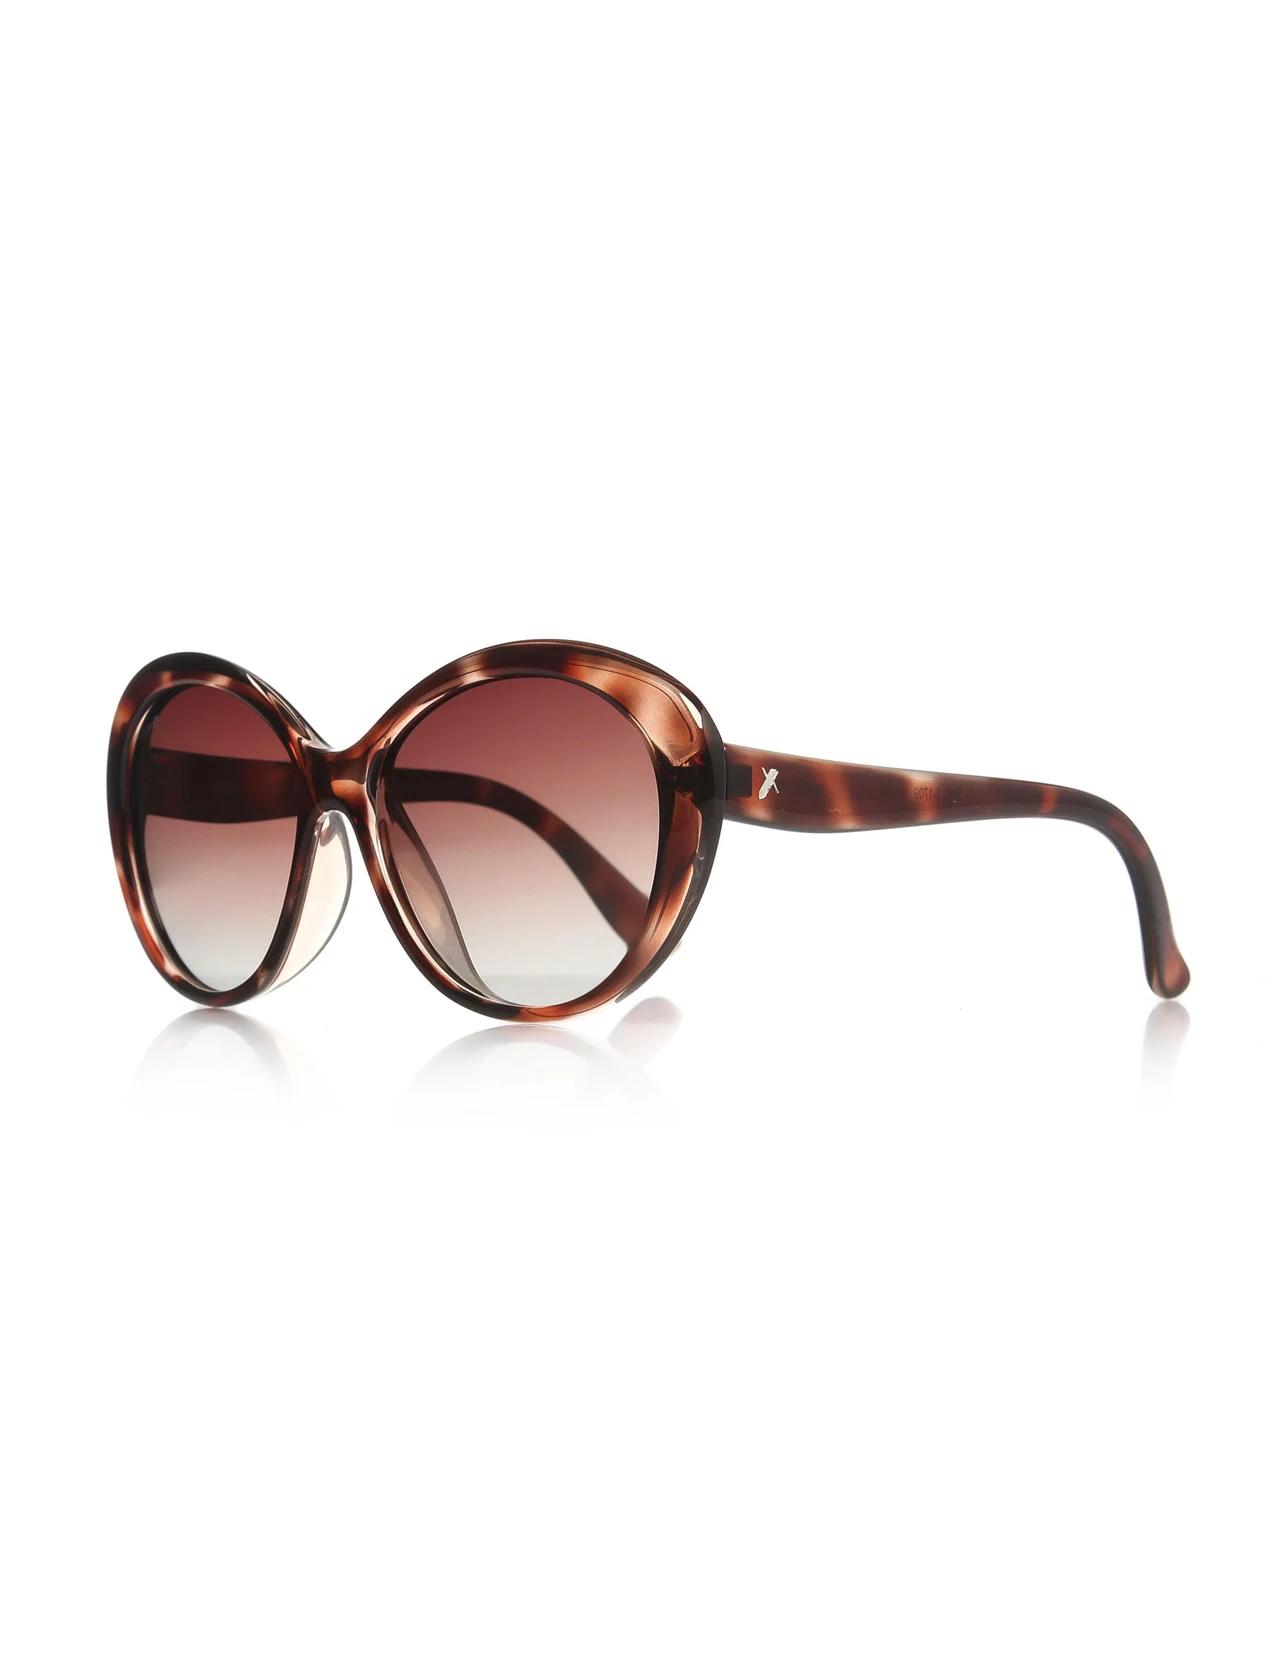 

Women's sunglasses e 1709 7085 bone Brown organic oval aval 57-16-140 exess